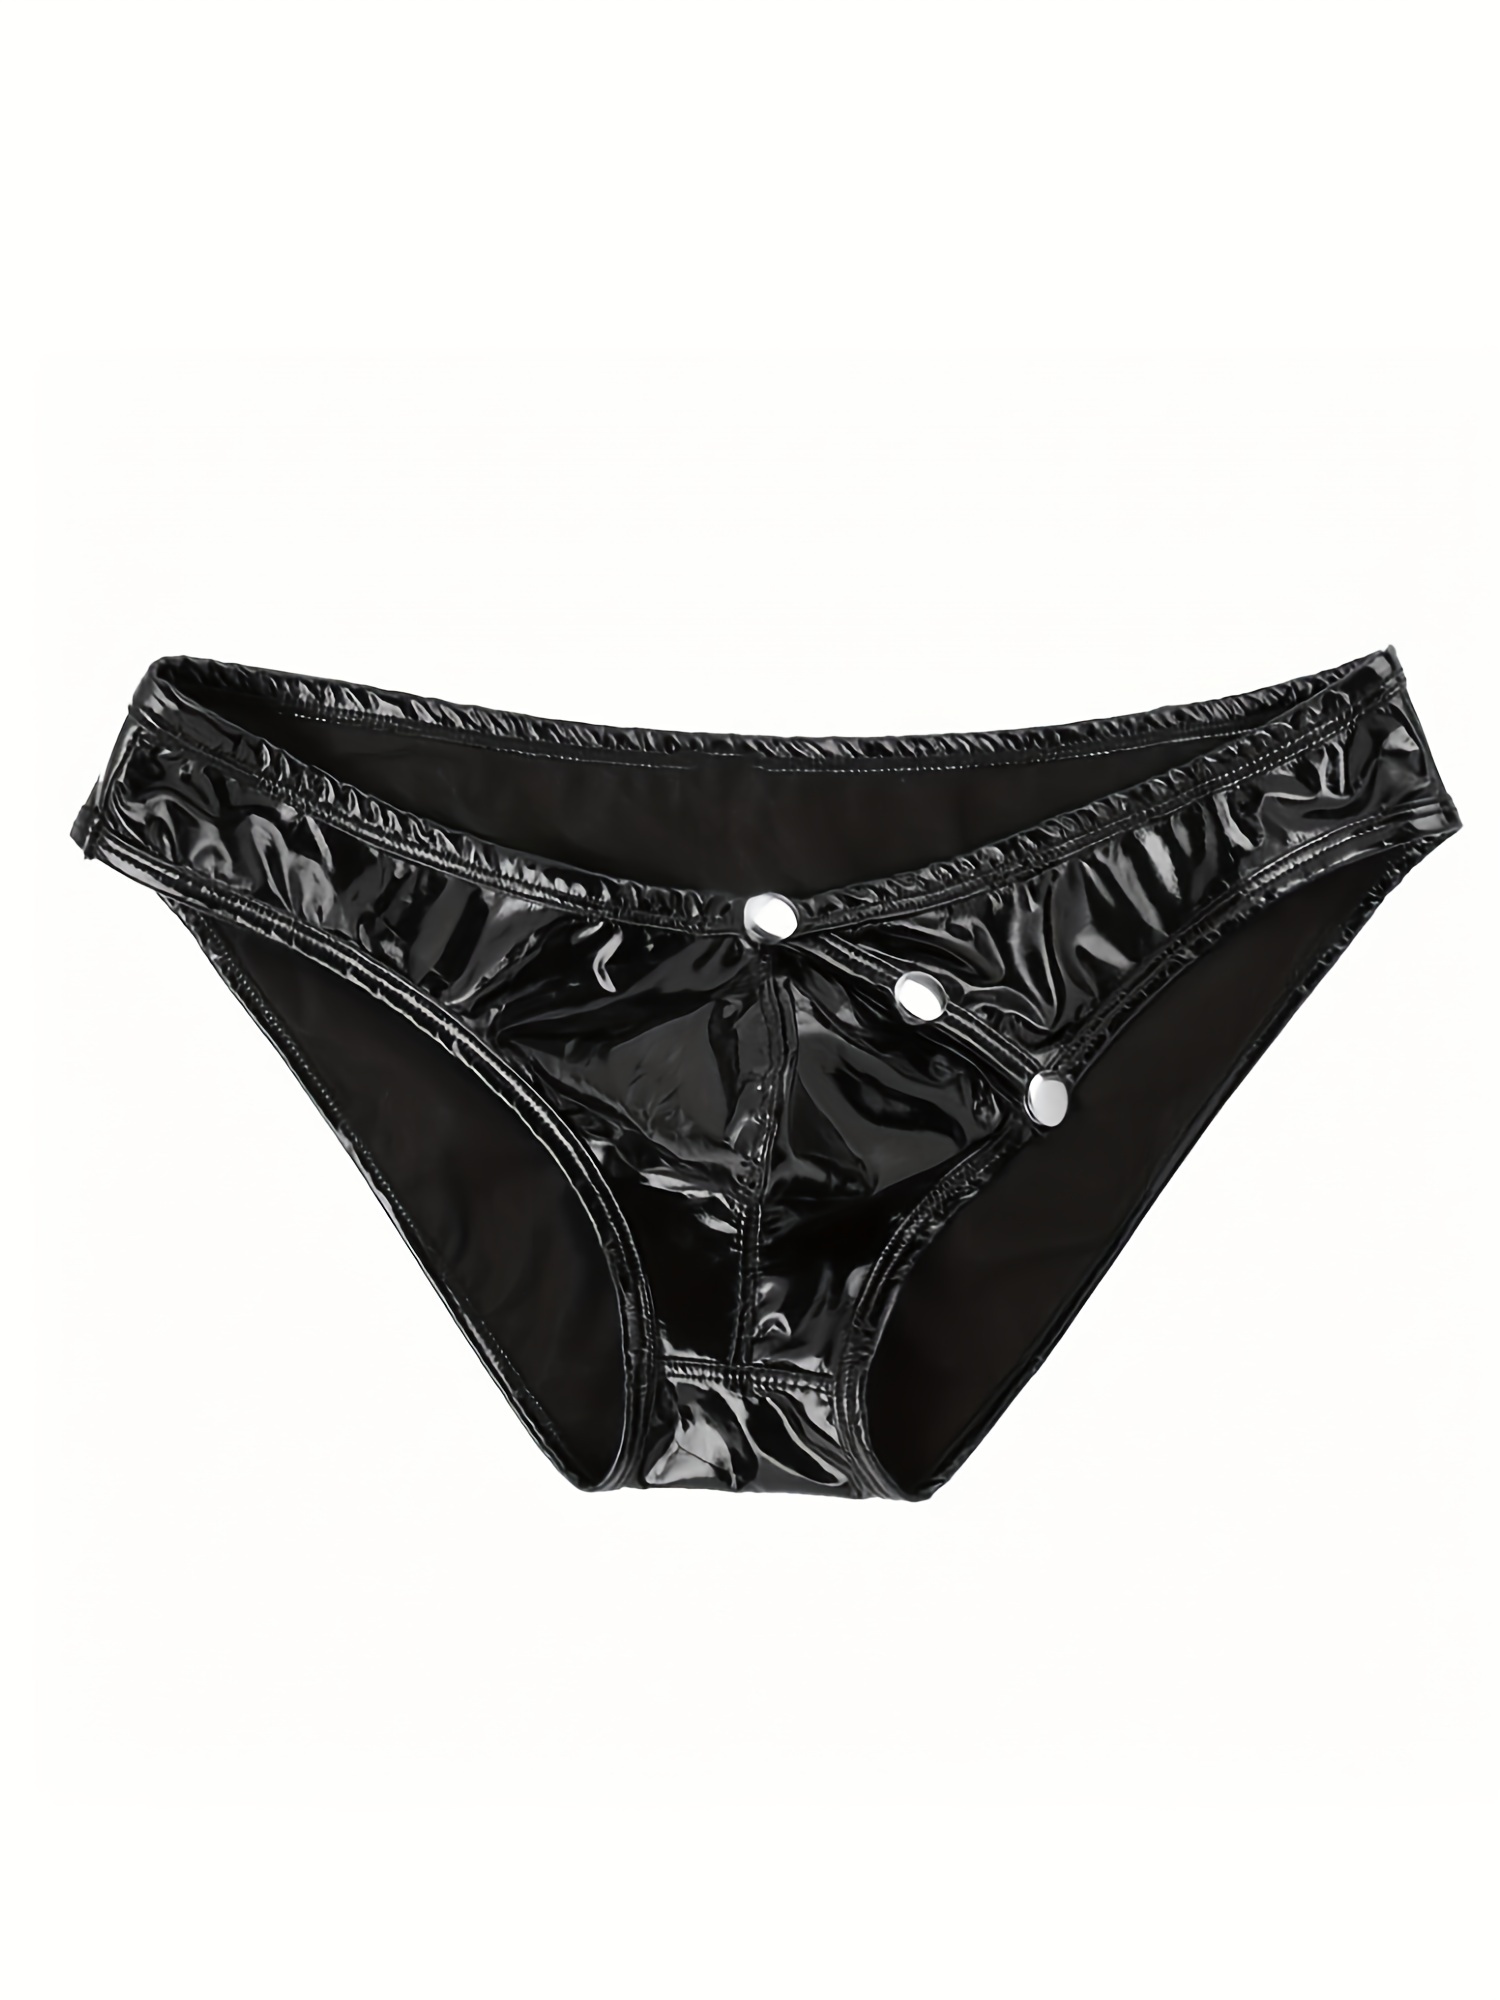 Men Sexy Comfortable Underwear PVC Leather Shiny Panties Fashion  Boxershorts